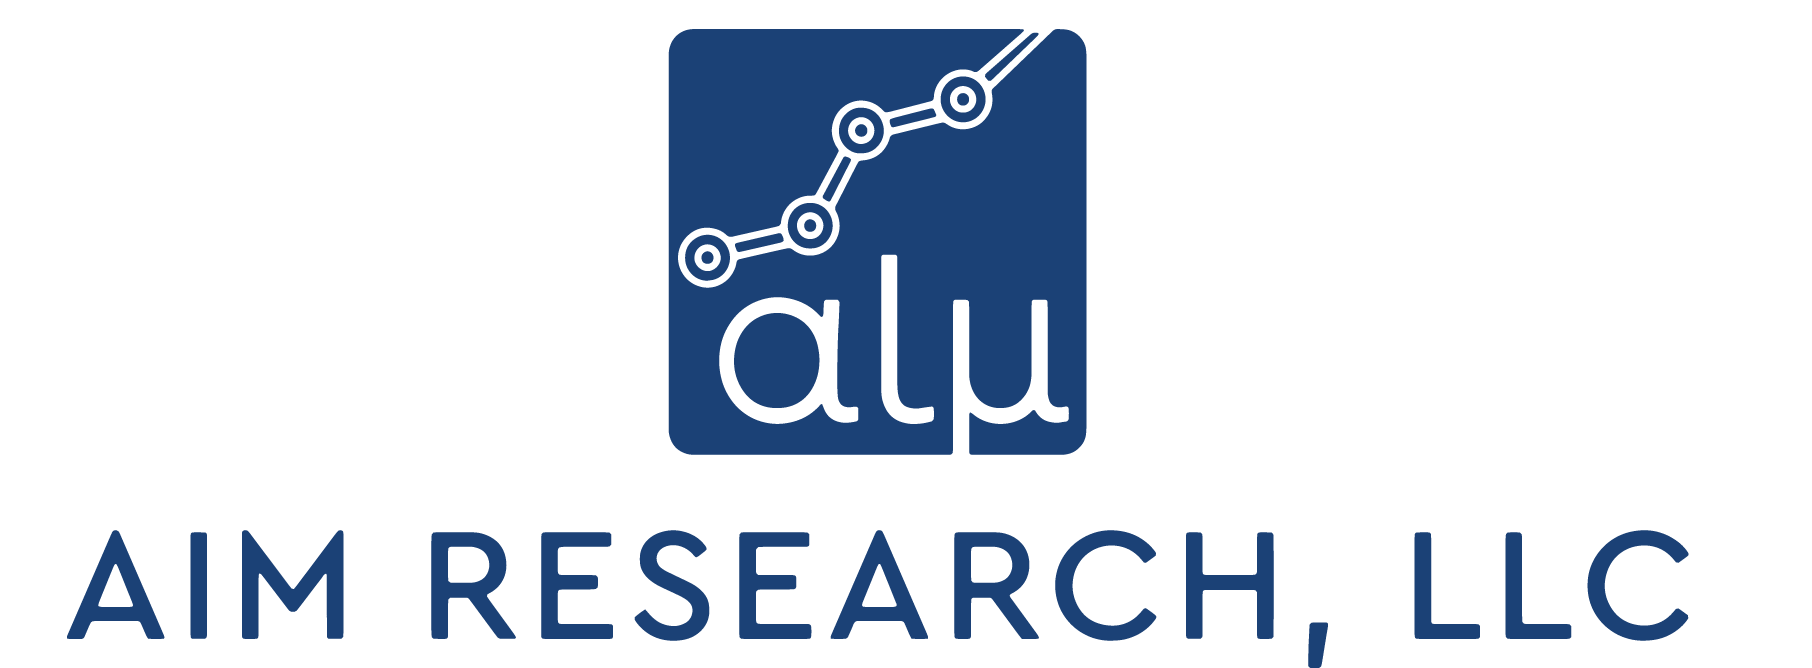 AIM Research, LLC